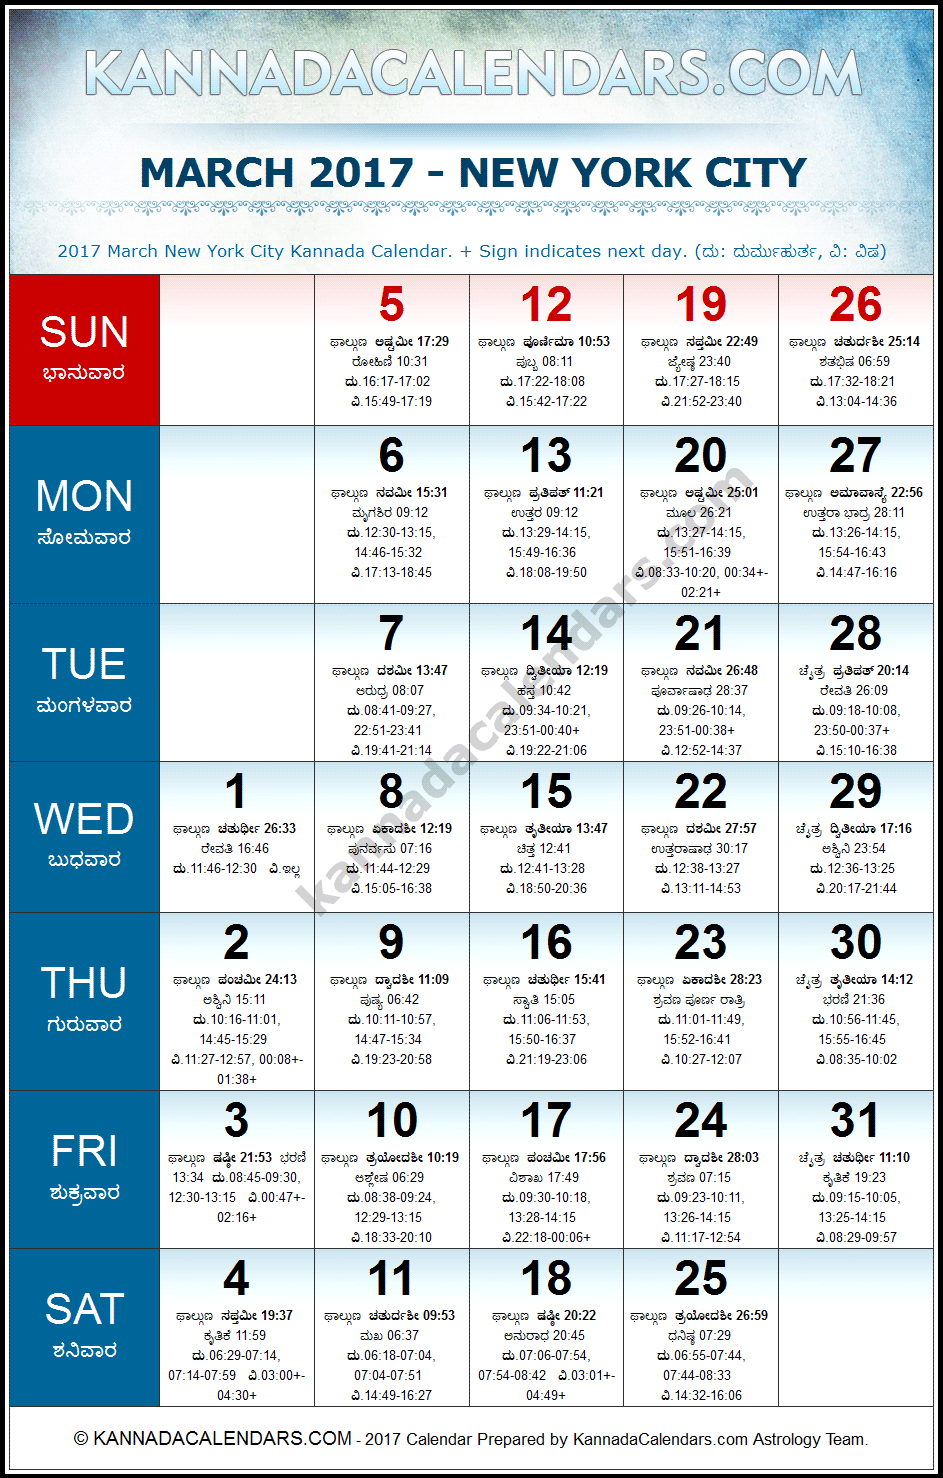 March 2017 Kannada Calendar for New York, USA